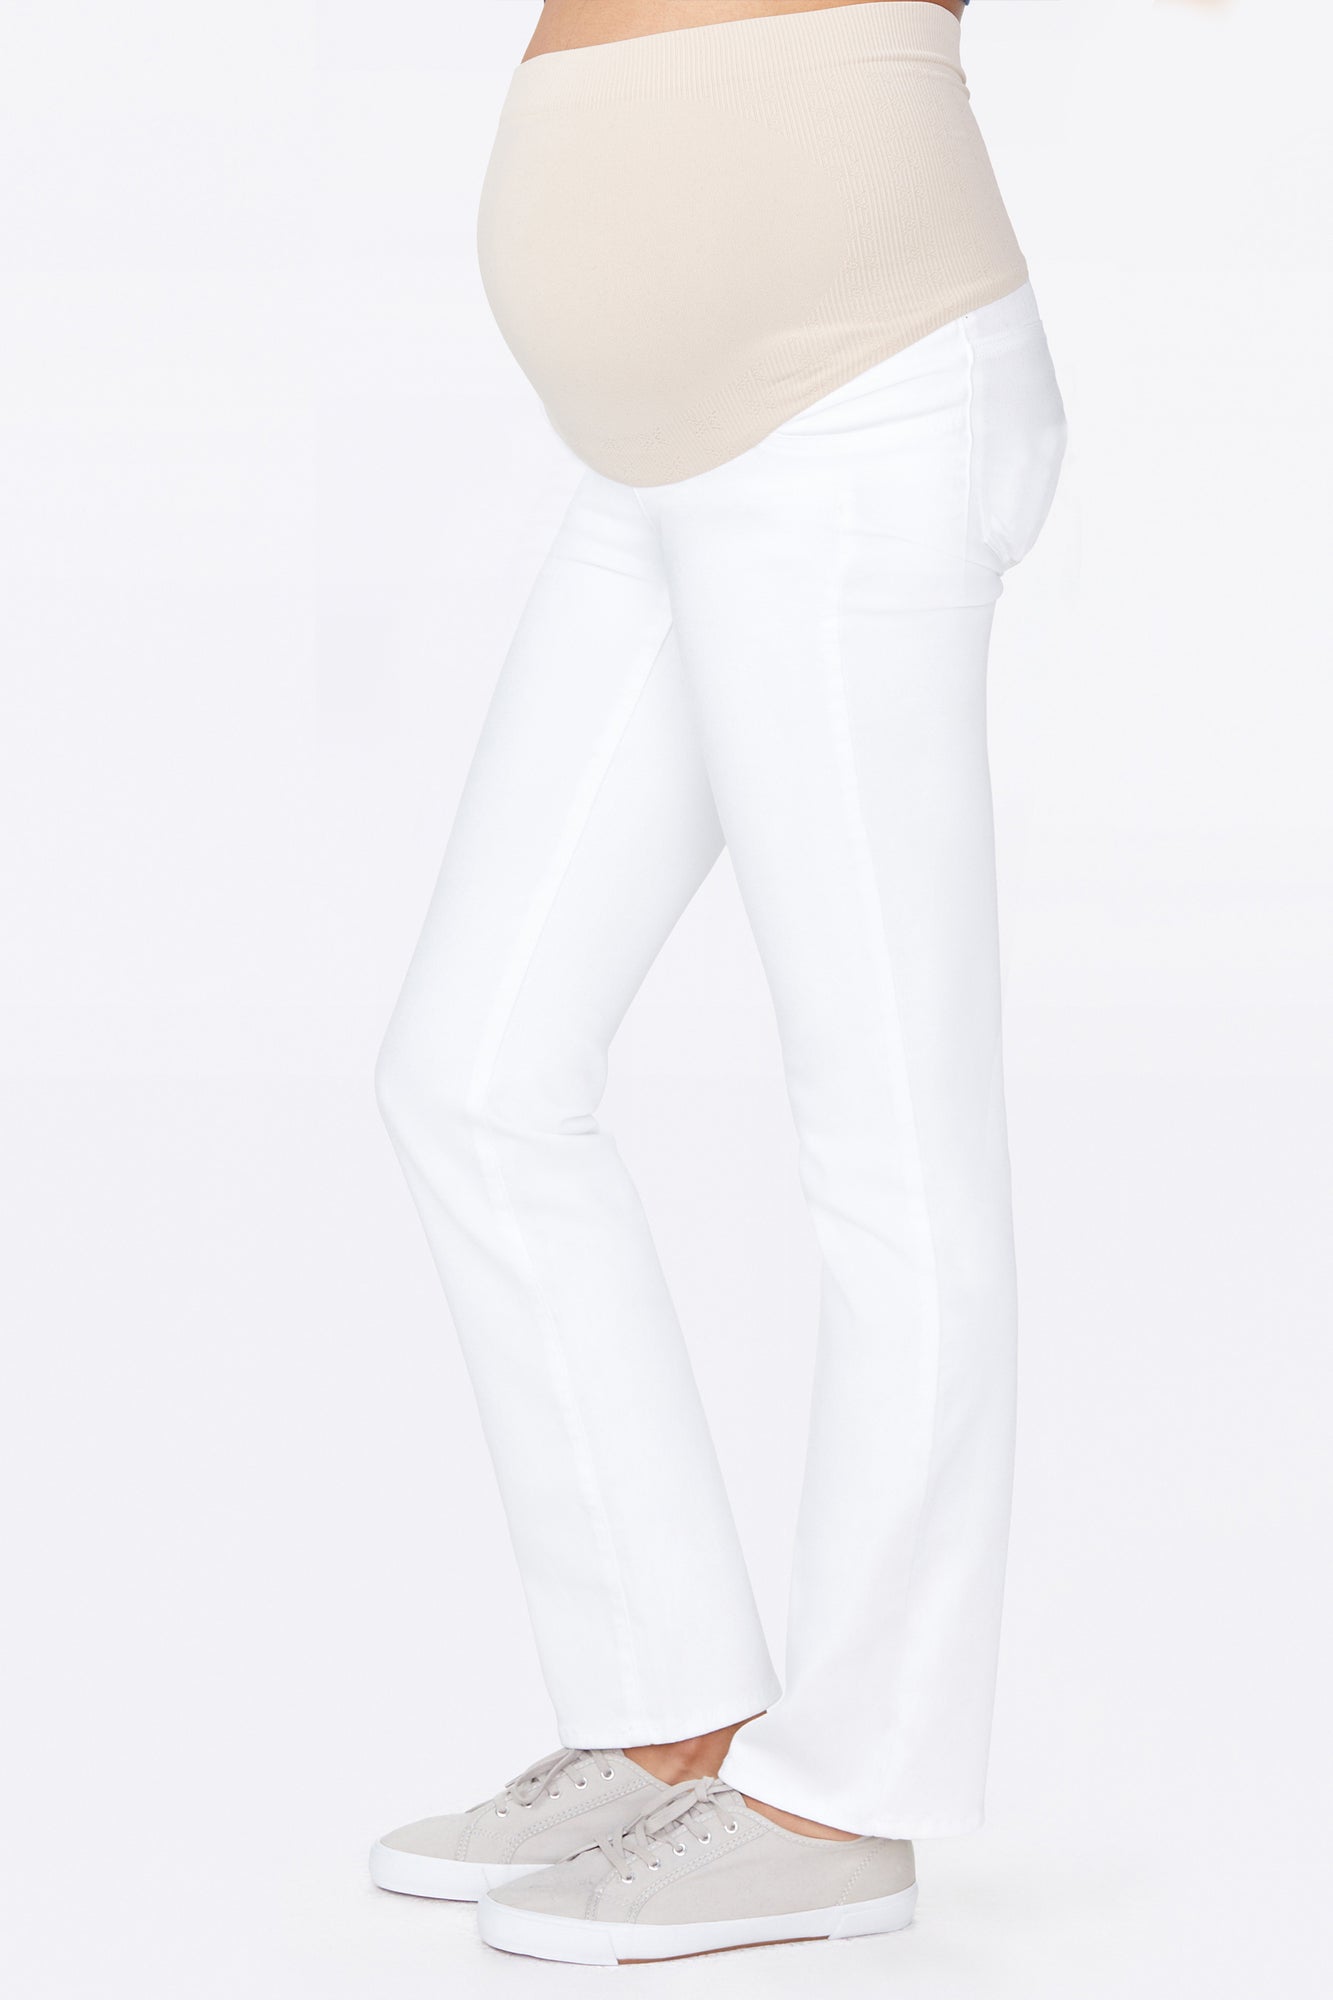 Seraphine Cropped Capri Maternity Jeans - White woman